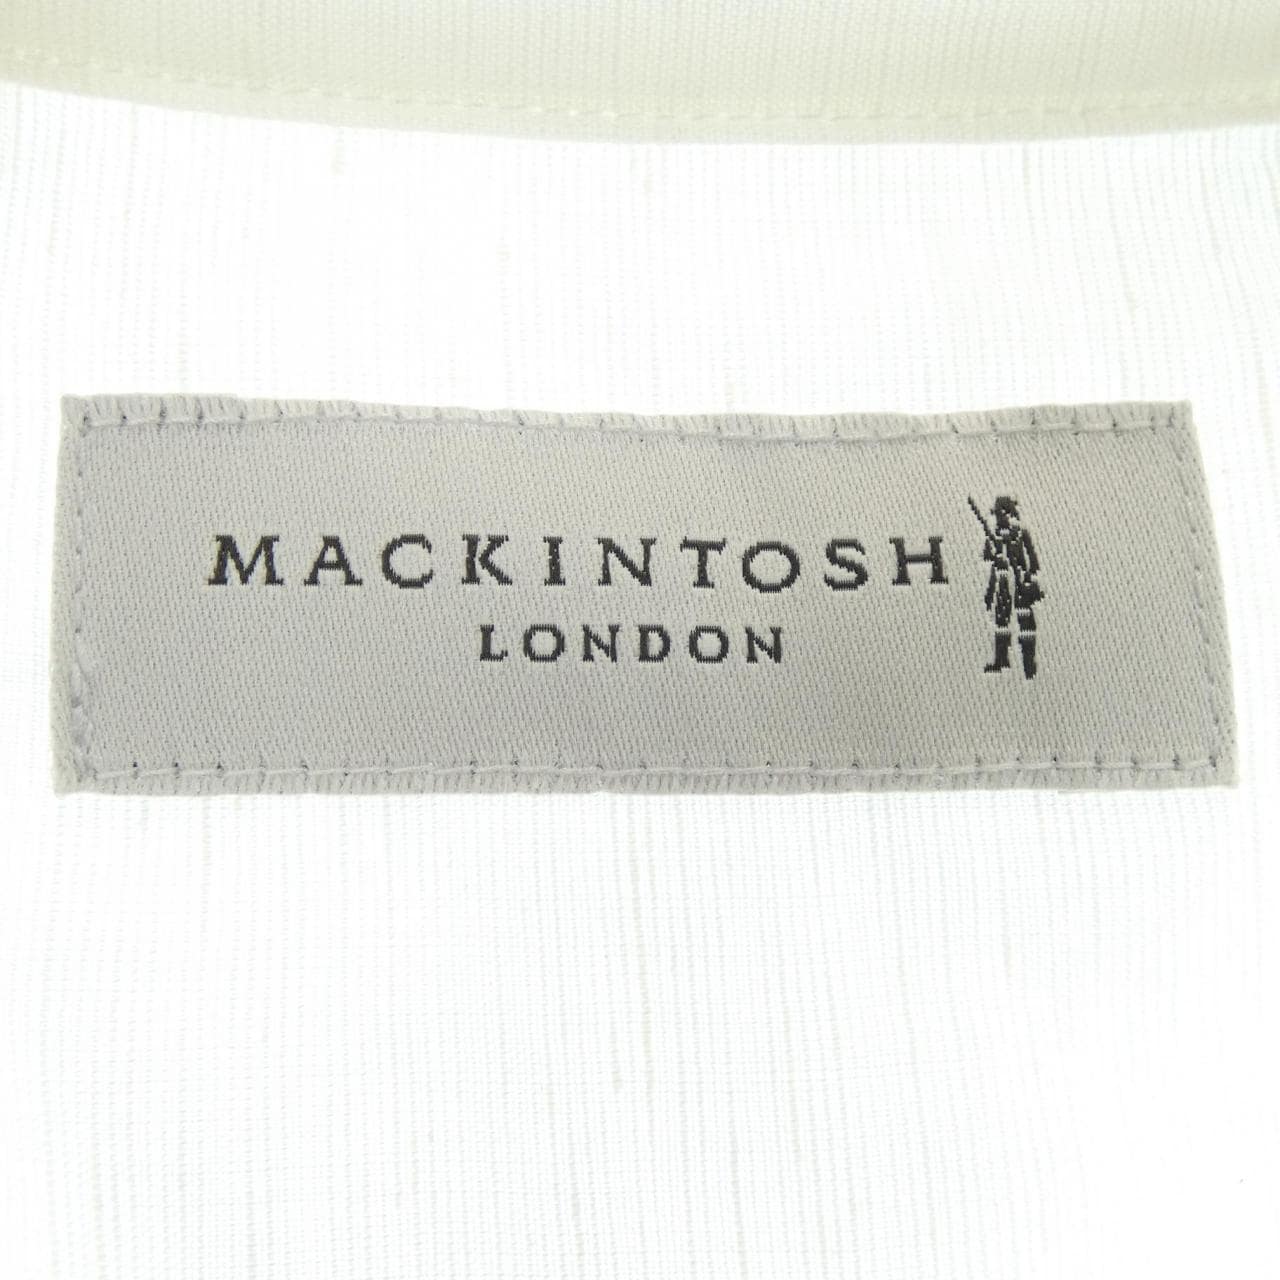 Mackintosh London MACKINTOSH LONDON shirt